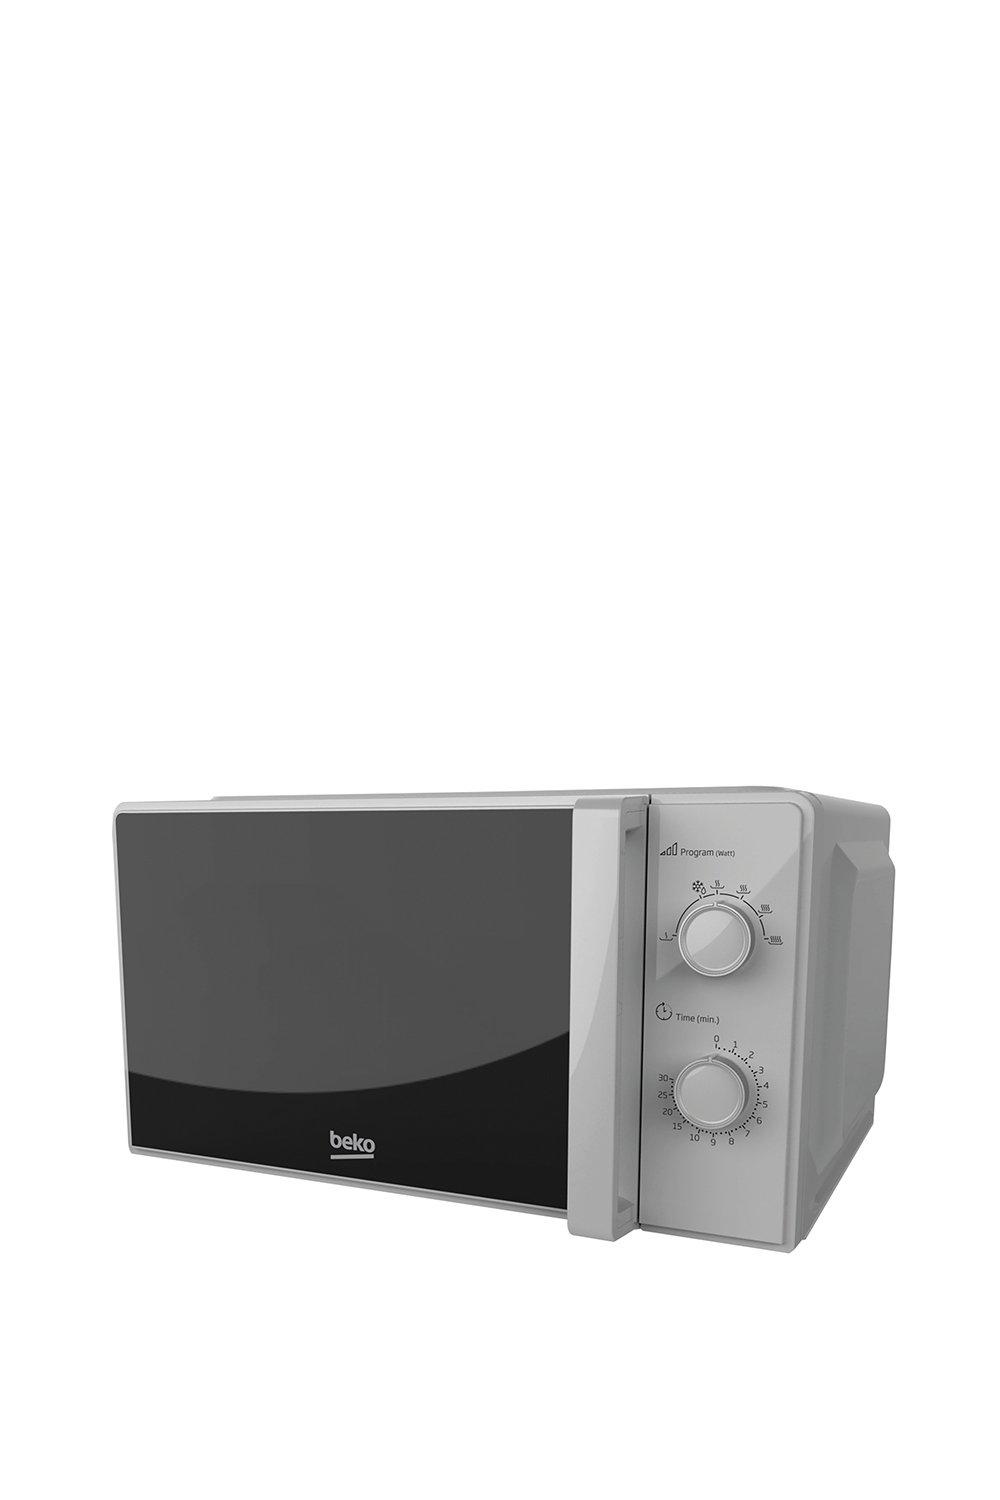 'Solo' Microwave 20 Litre